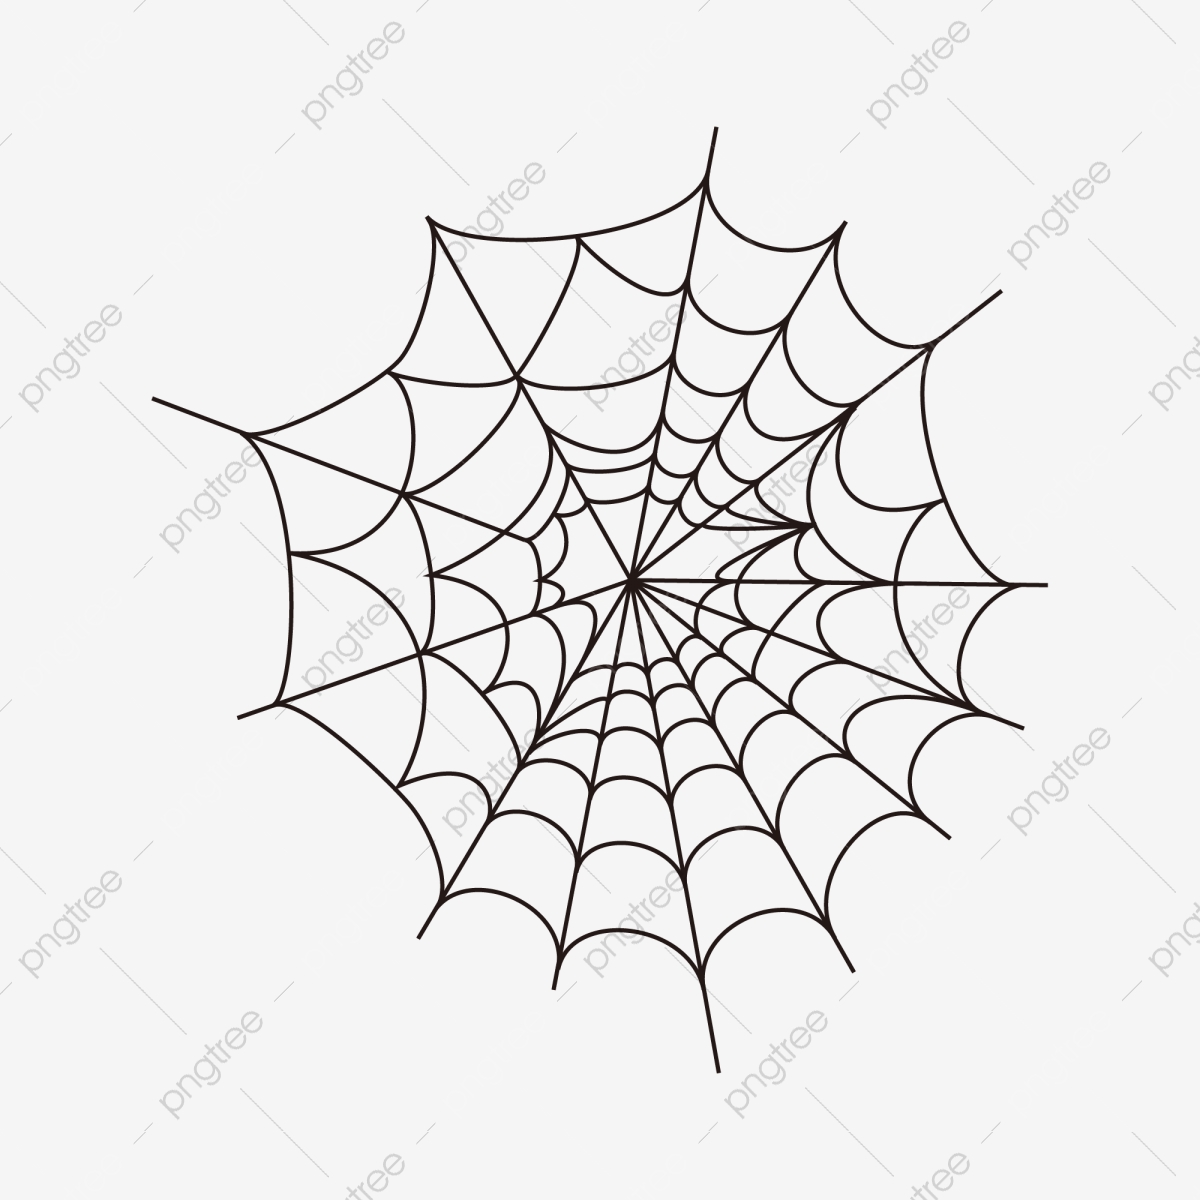 Creative spider web icon. Spiderweb clipart cartoon